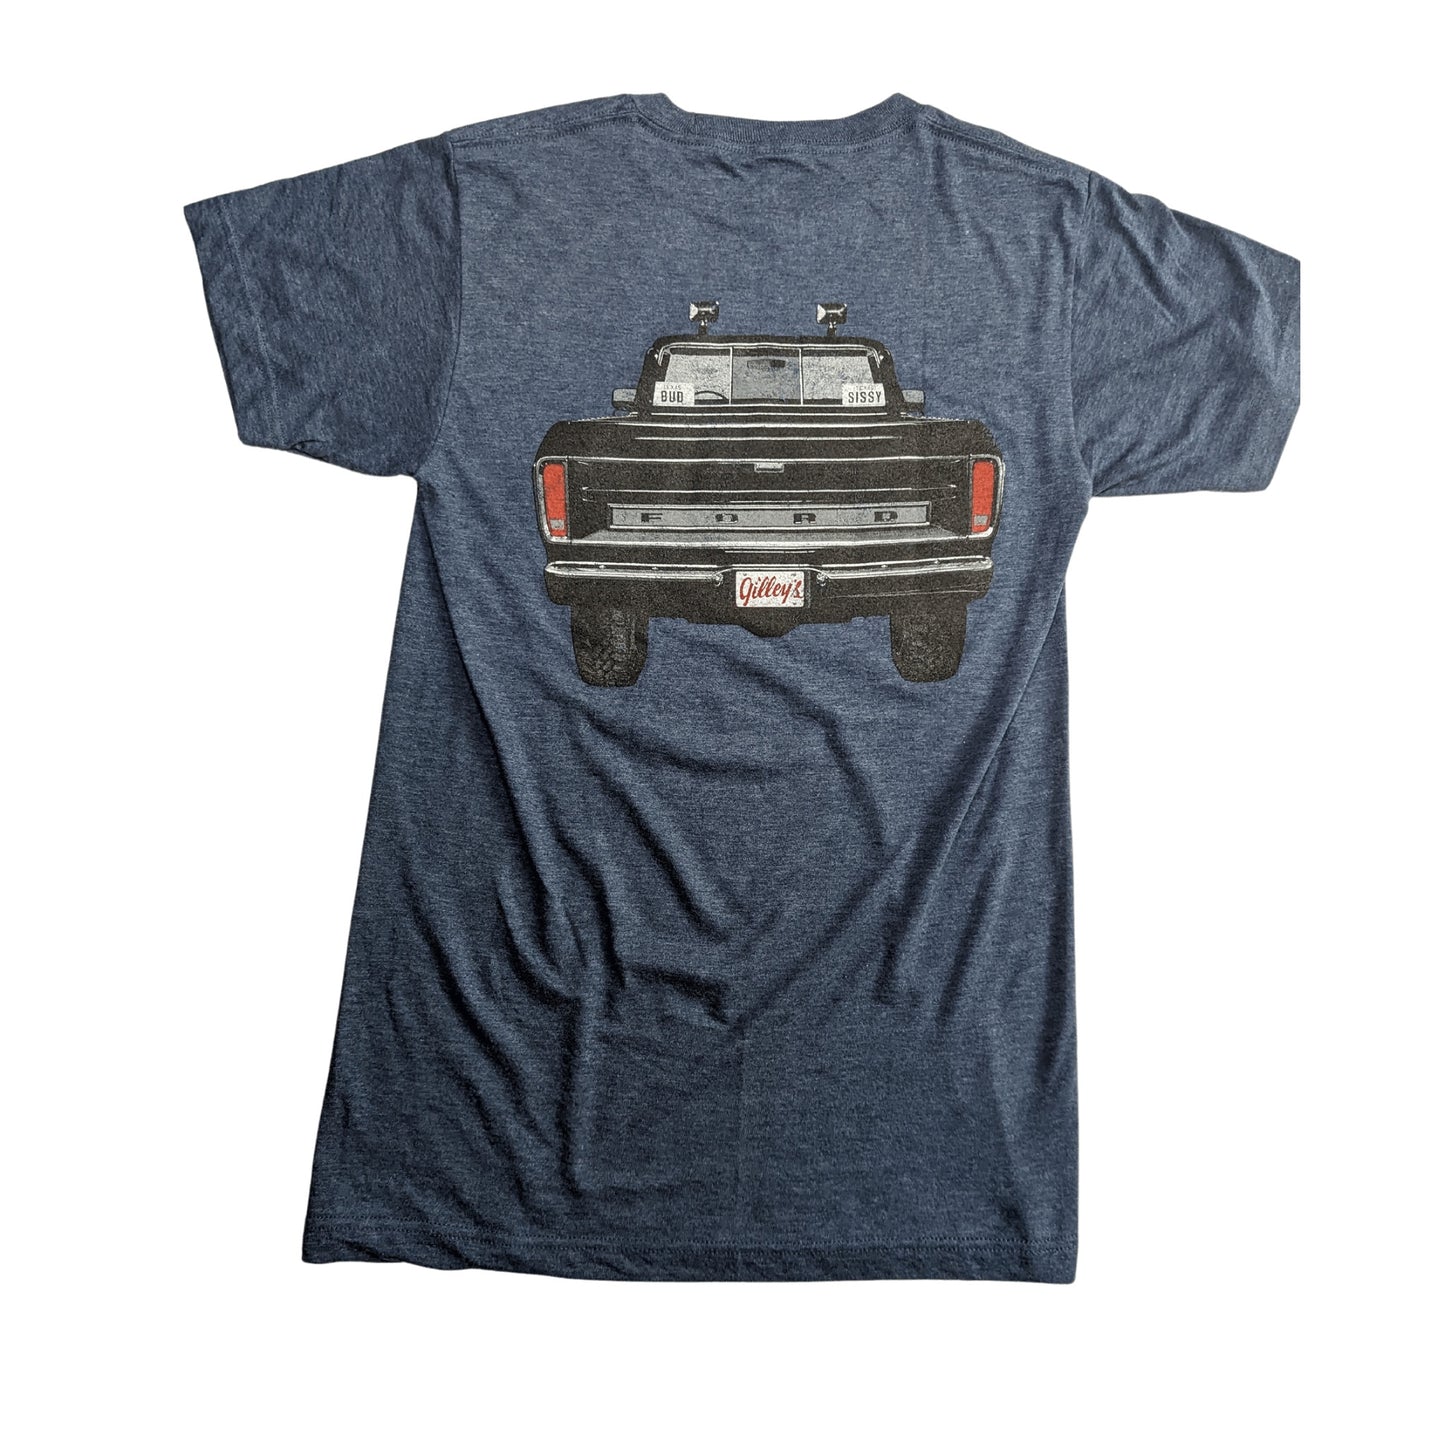 Gilley's Pickup Truck Shirt